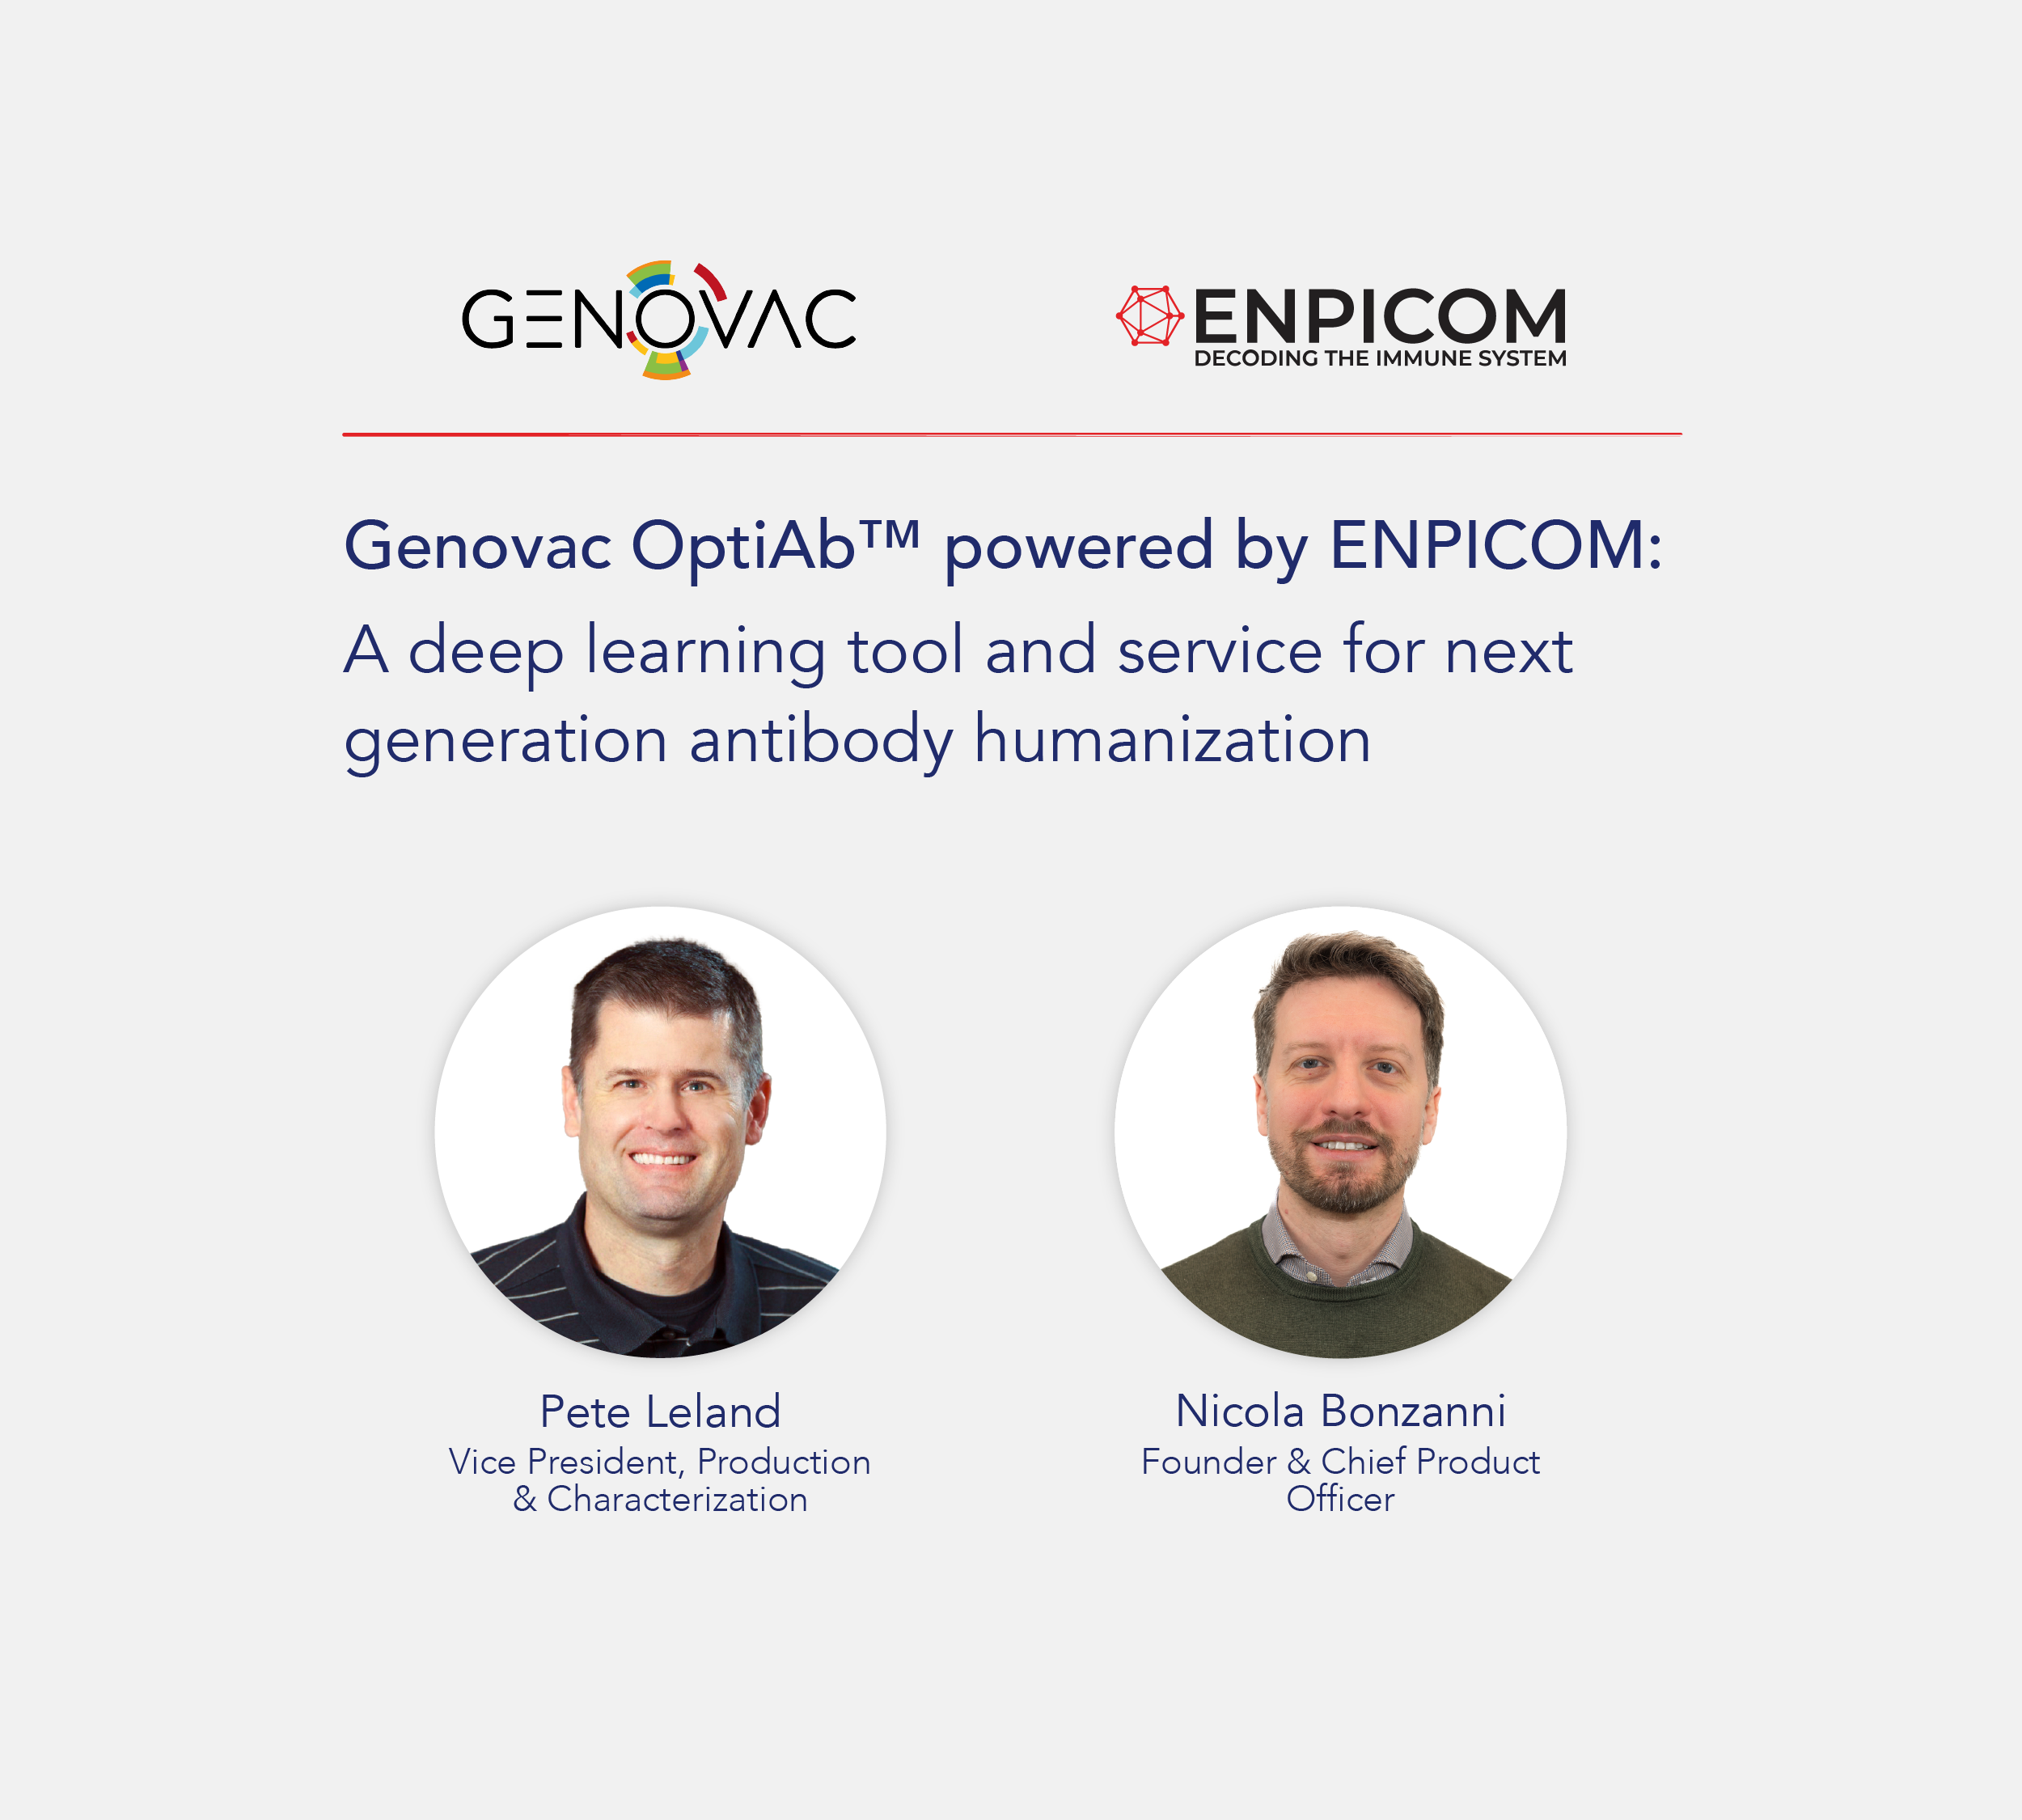 Nicola Bonzanni (ENPICOM) and Pete Leland (Genovac) presenting "Genovac OptiAb powered by ENPICOM - A deep learning tool and service for next generation antibody humanization"